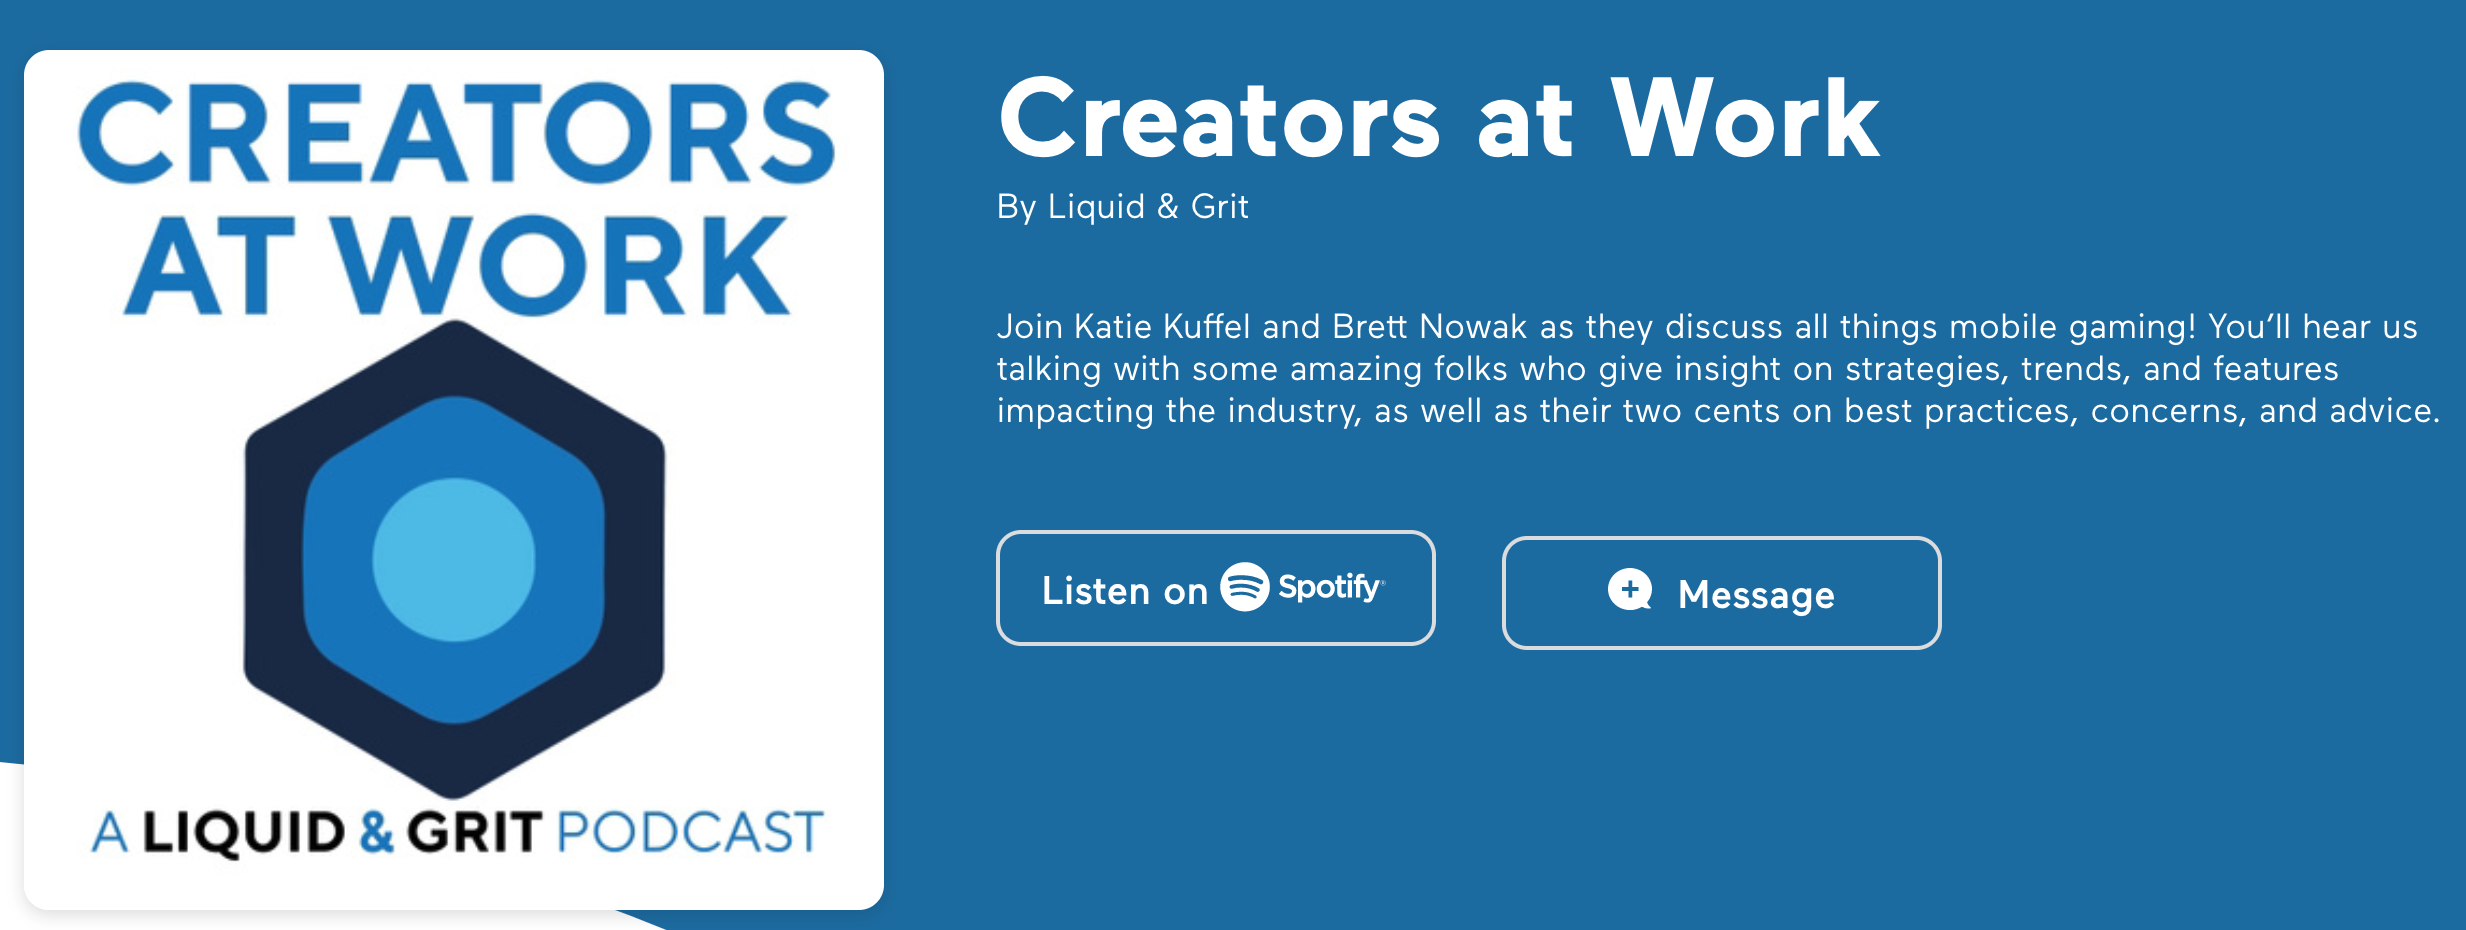 JK on Creators at Work Podcast